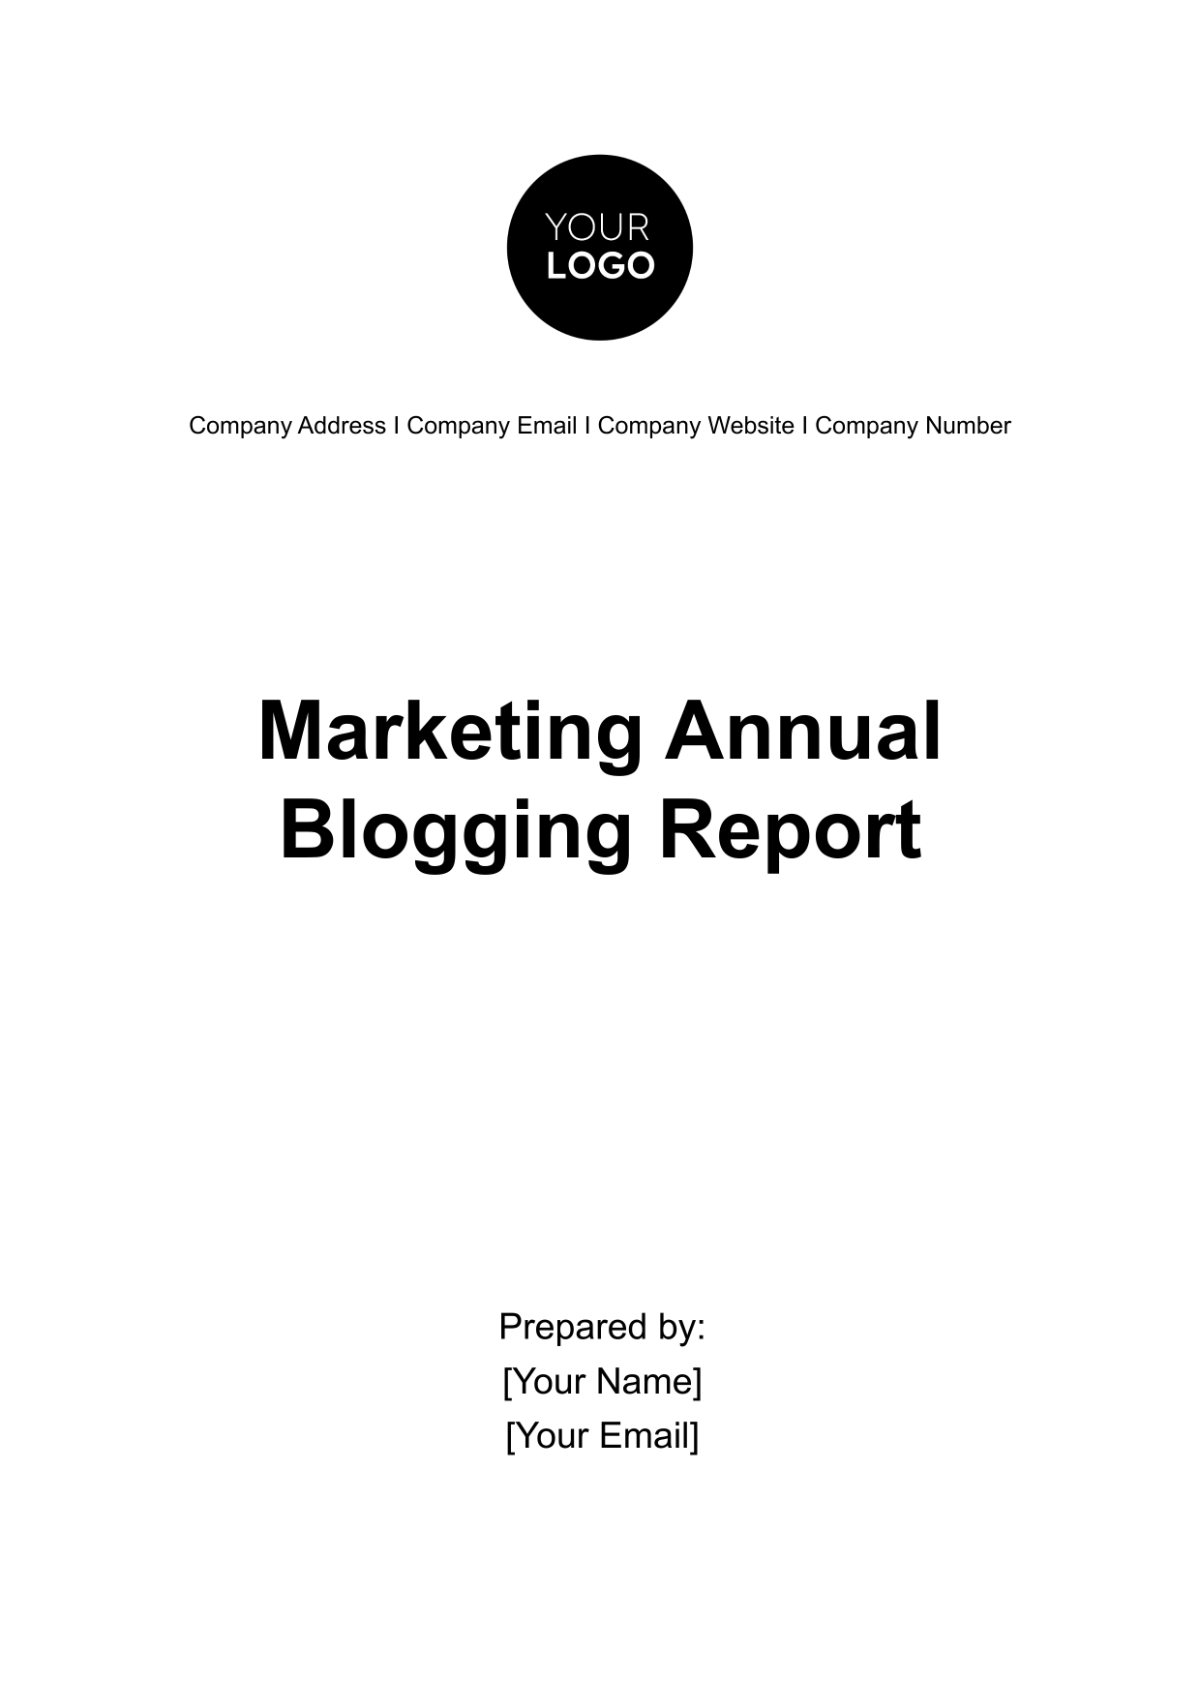 Marketing Annual Blogging Report Template